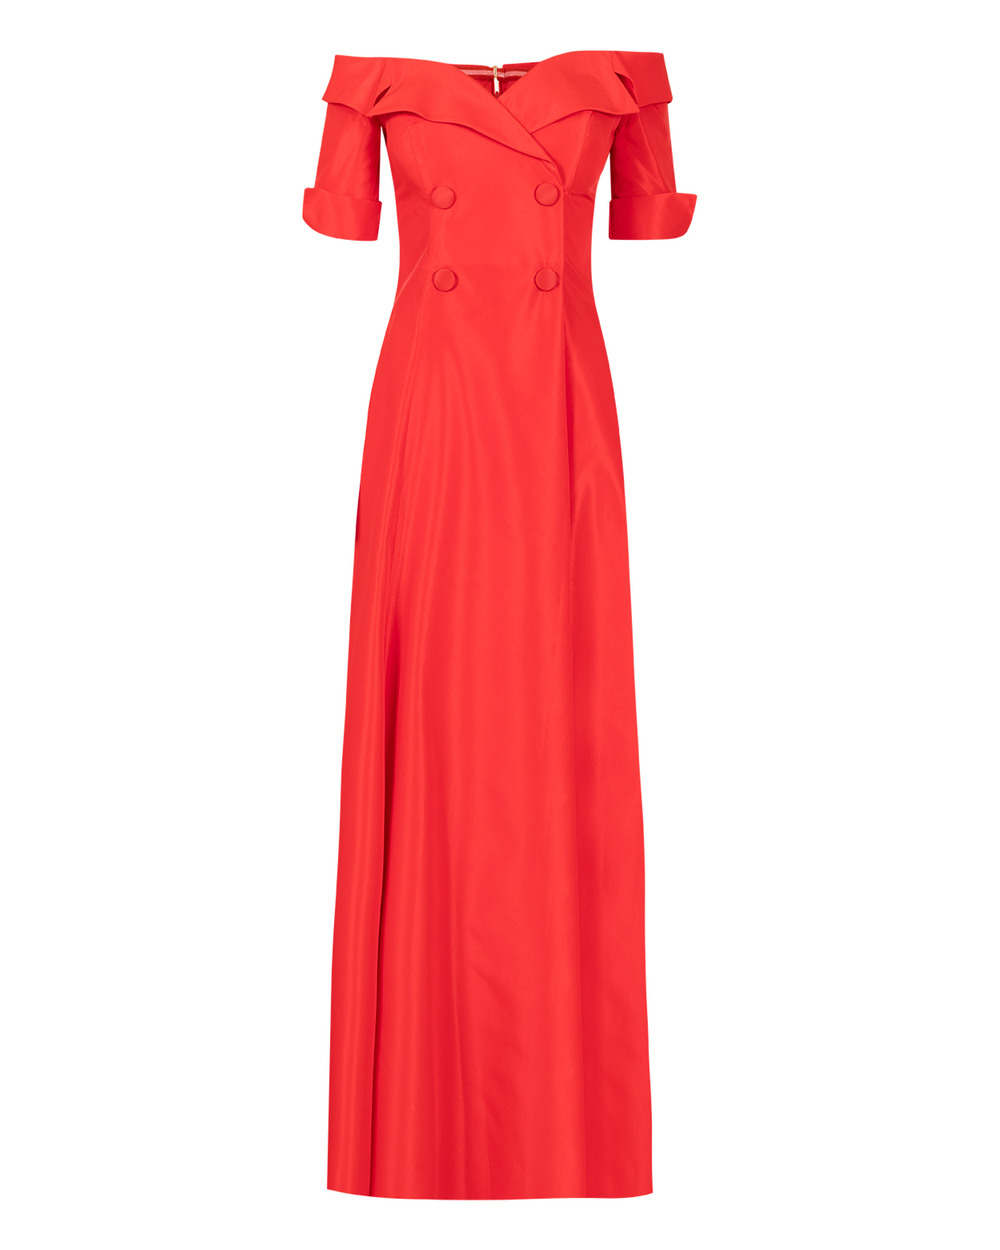 Plus Size A-Line Open Shoulder Taffeta Evening Dress